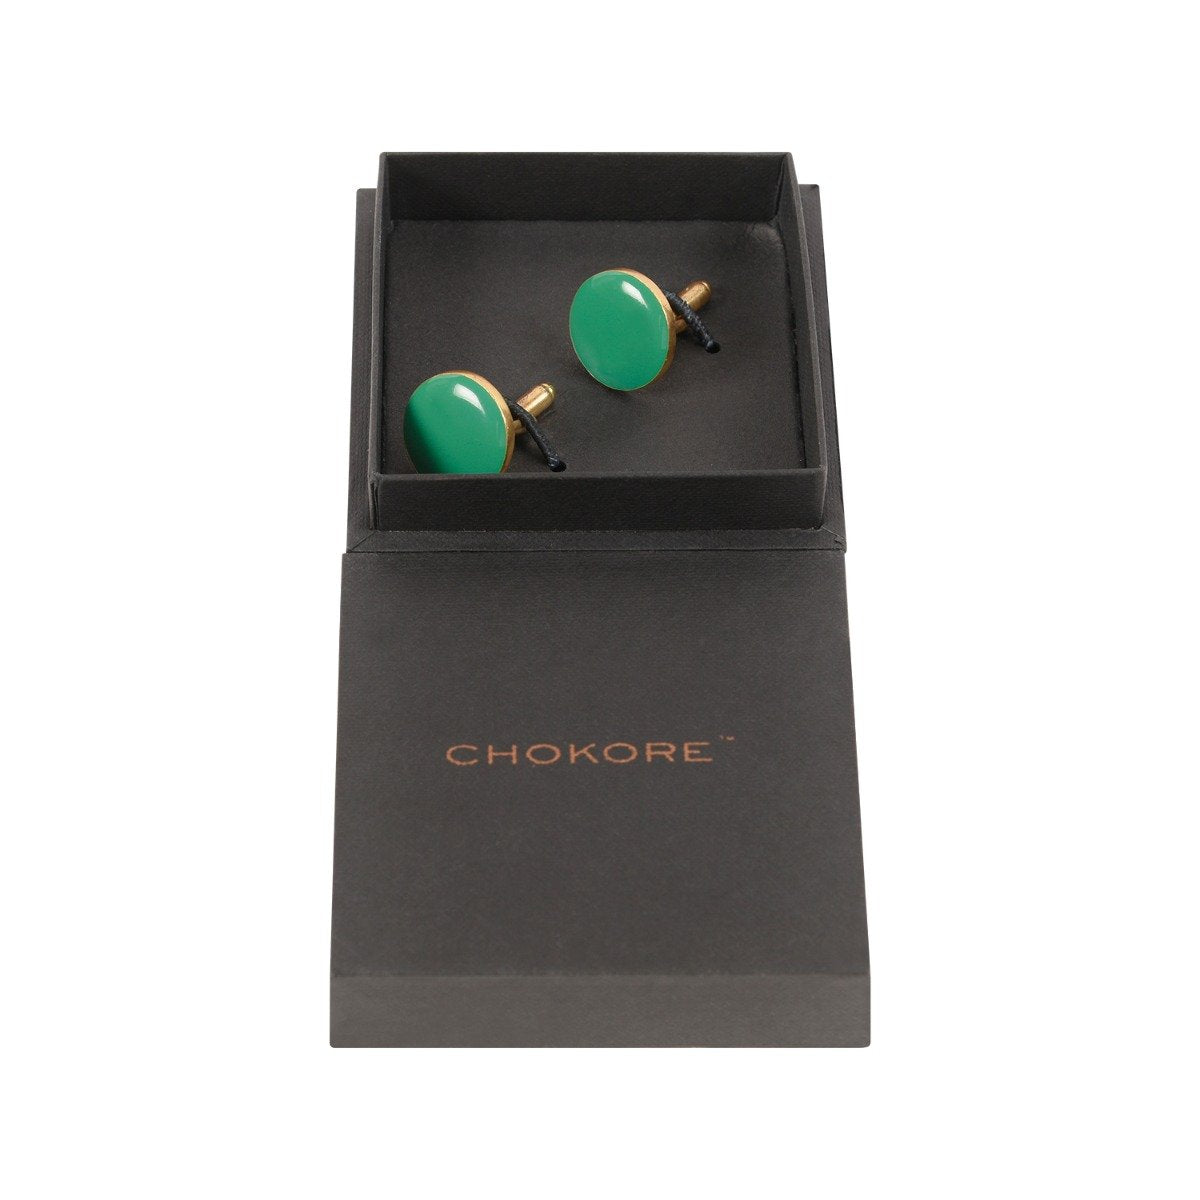 Chokore Green color Round shape Cufflinks